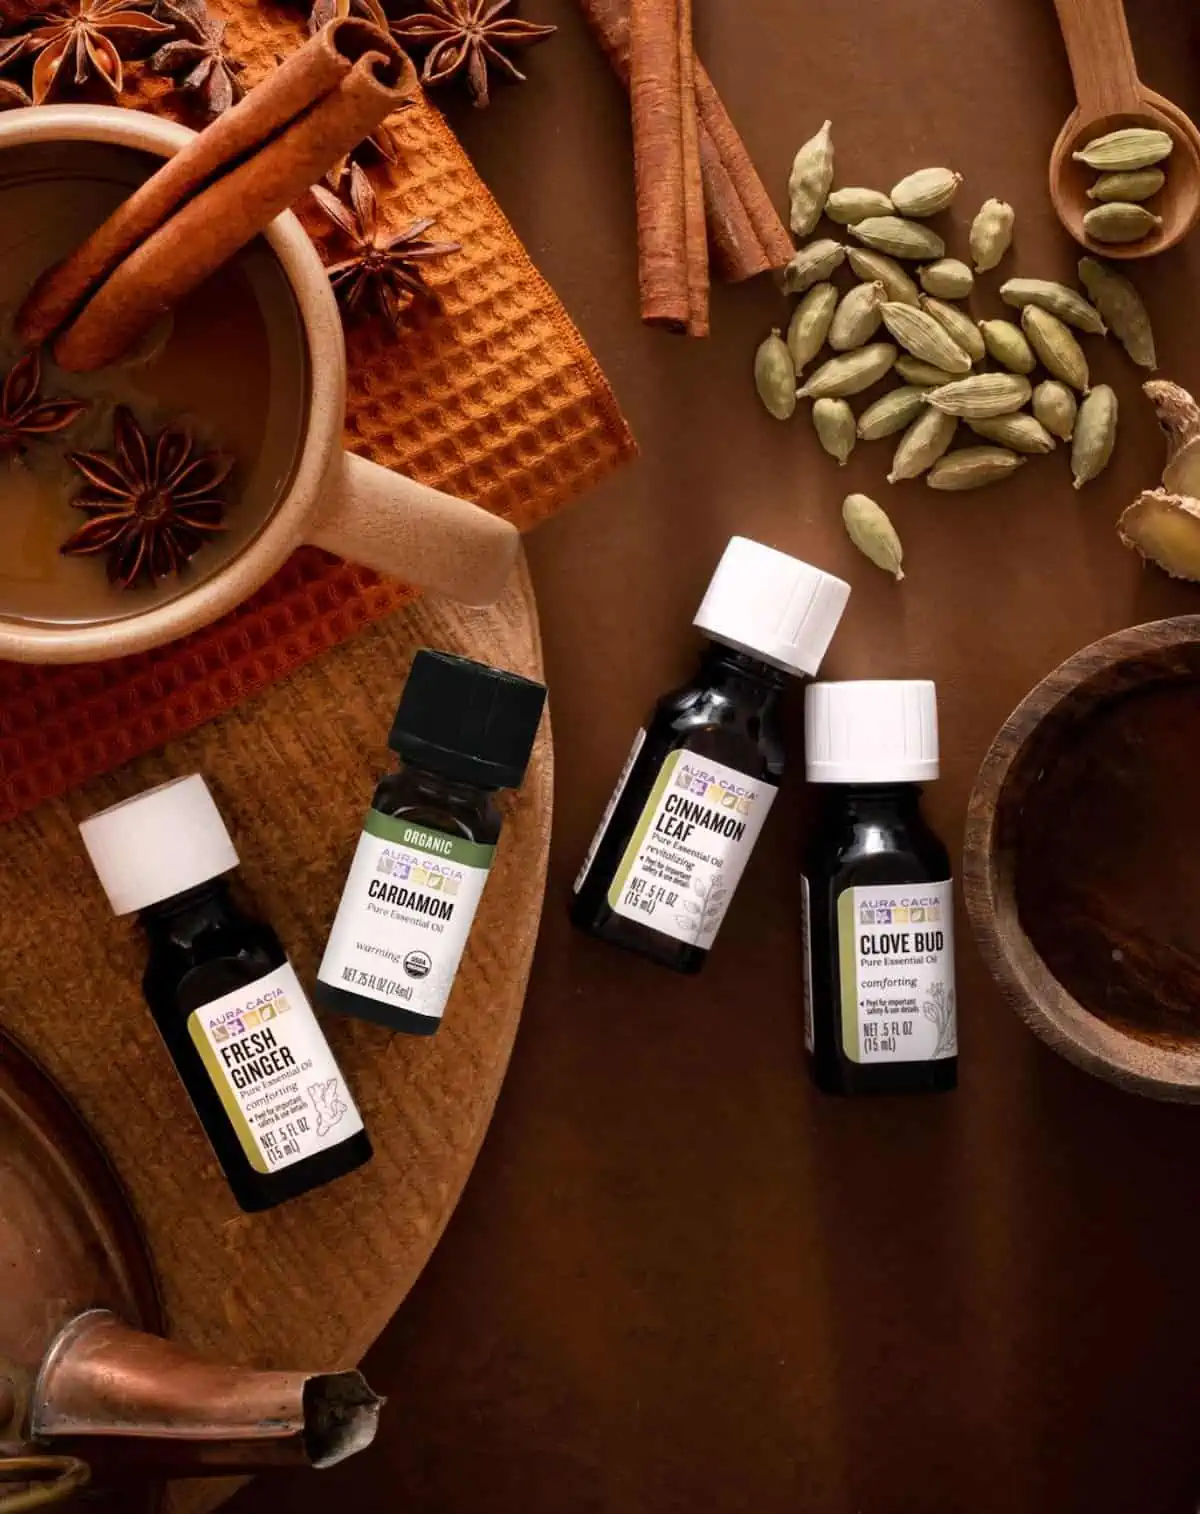 An arrangement of essential oils against a warm, wooden background.